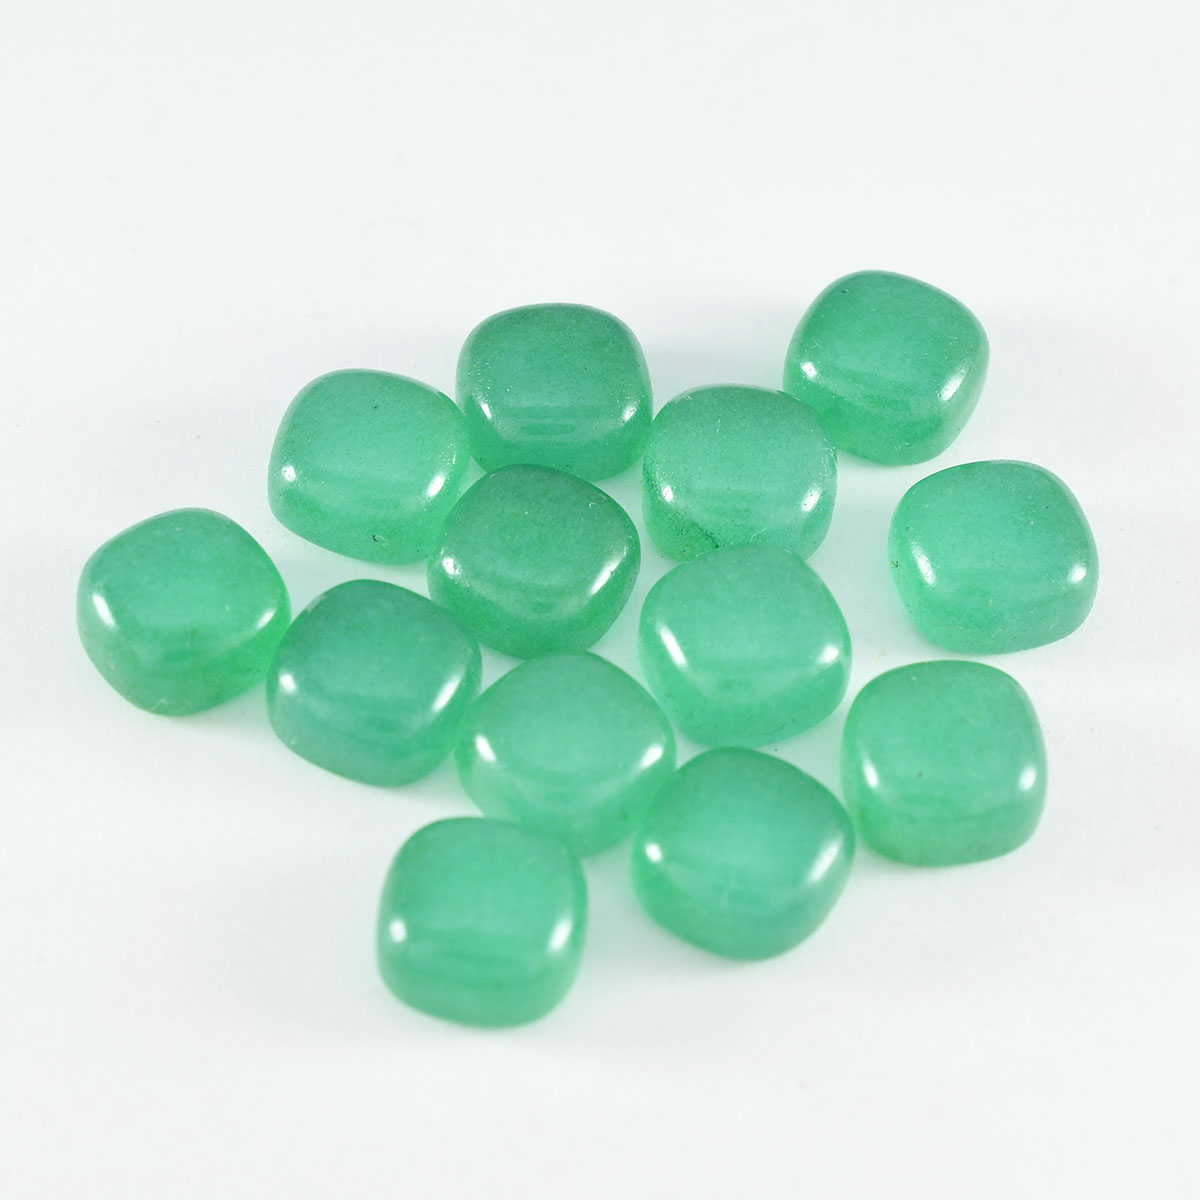 Riyogems 1 Stück grüner Onyx-Cabochon, 5 x 5 mm, Kissenform, A-Qualität, lose Edelsteine